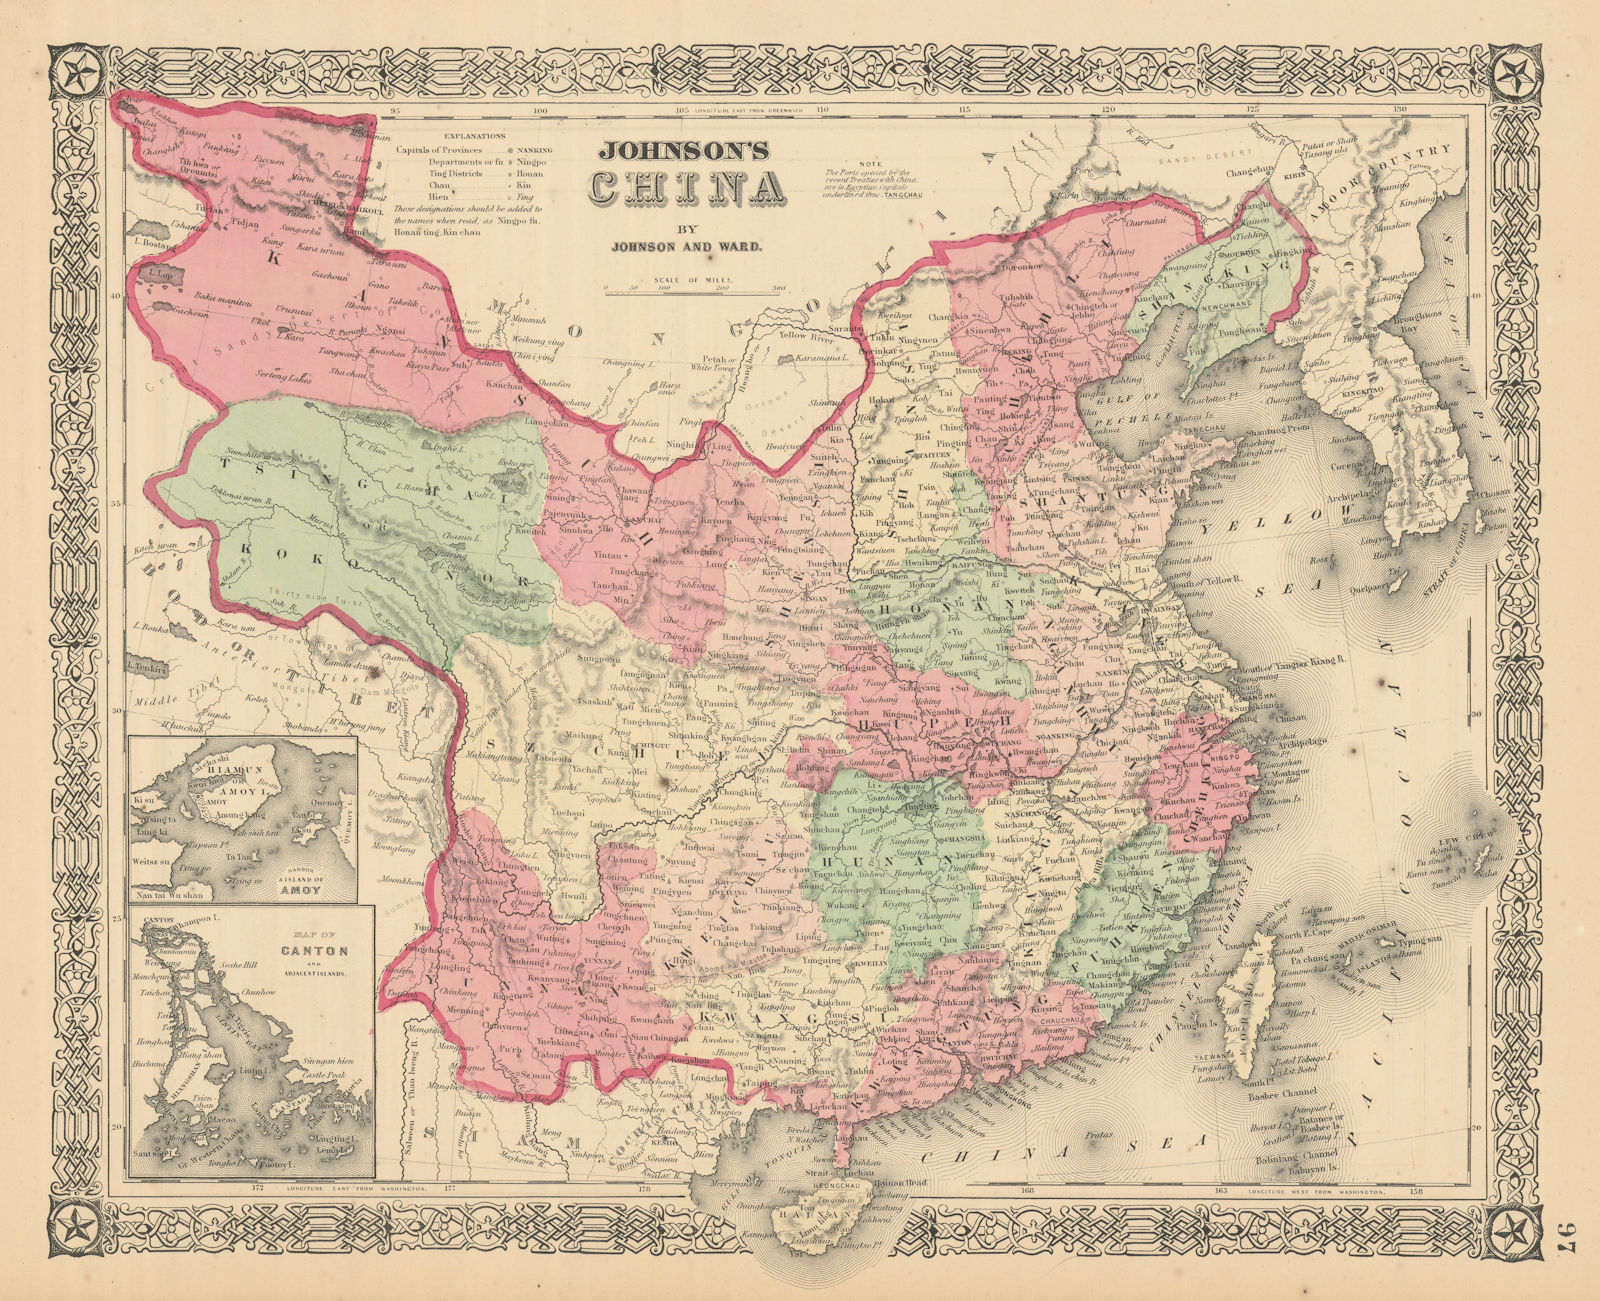 Associate Product Johnson's China. Amoy Xiamen Harbor. Canton Hong Kong Macao 1866 old map